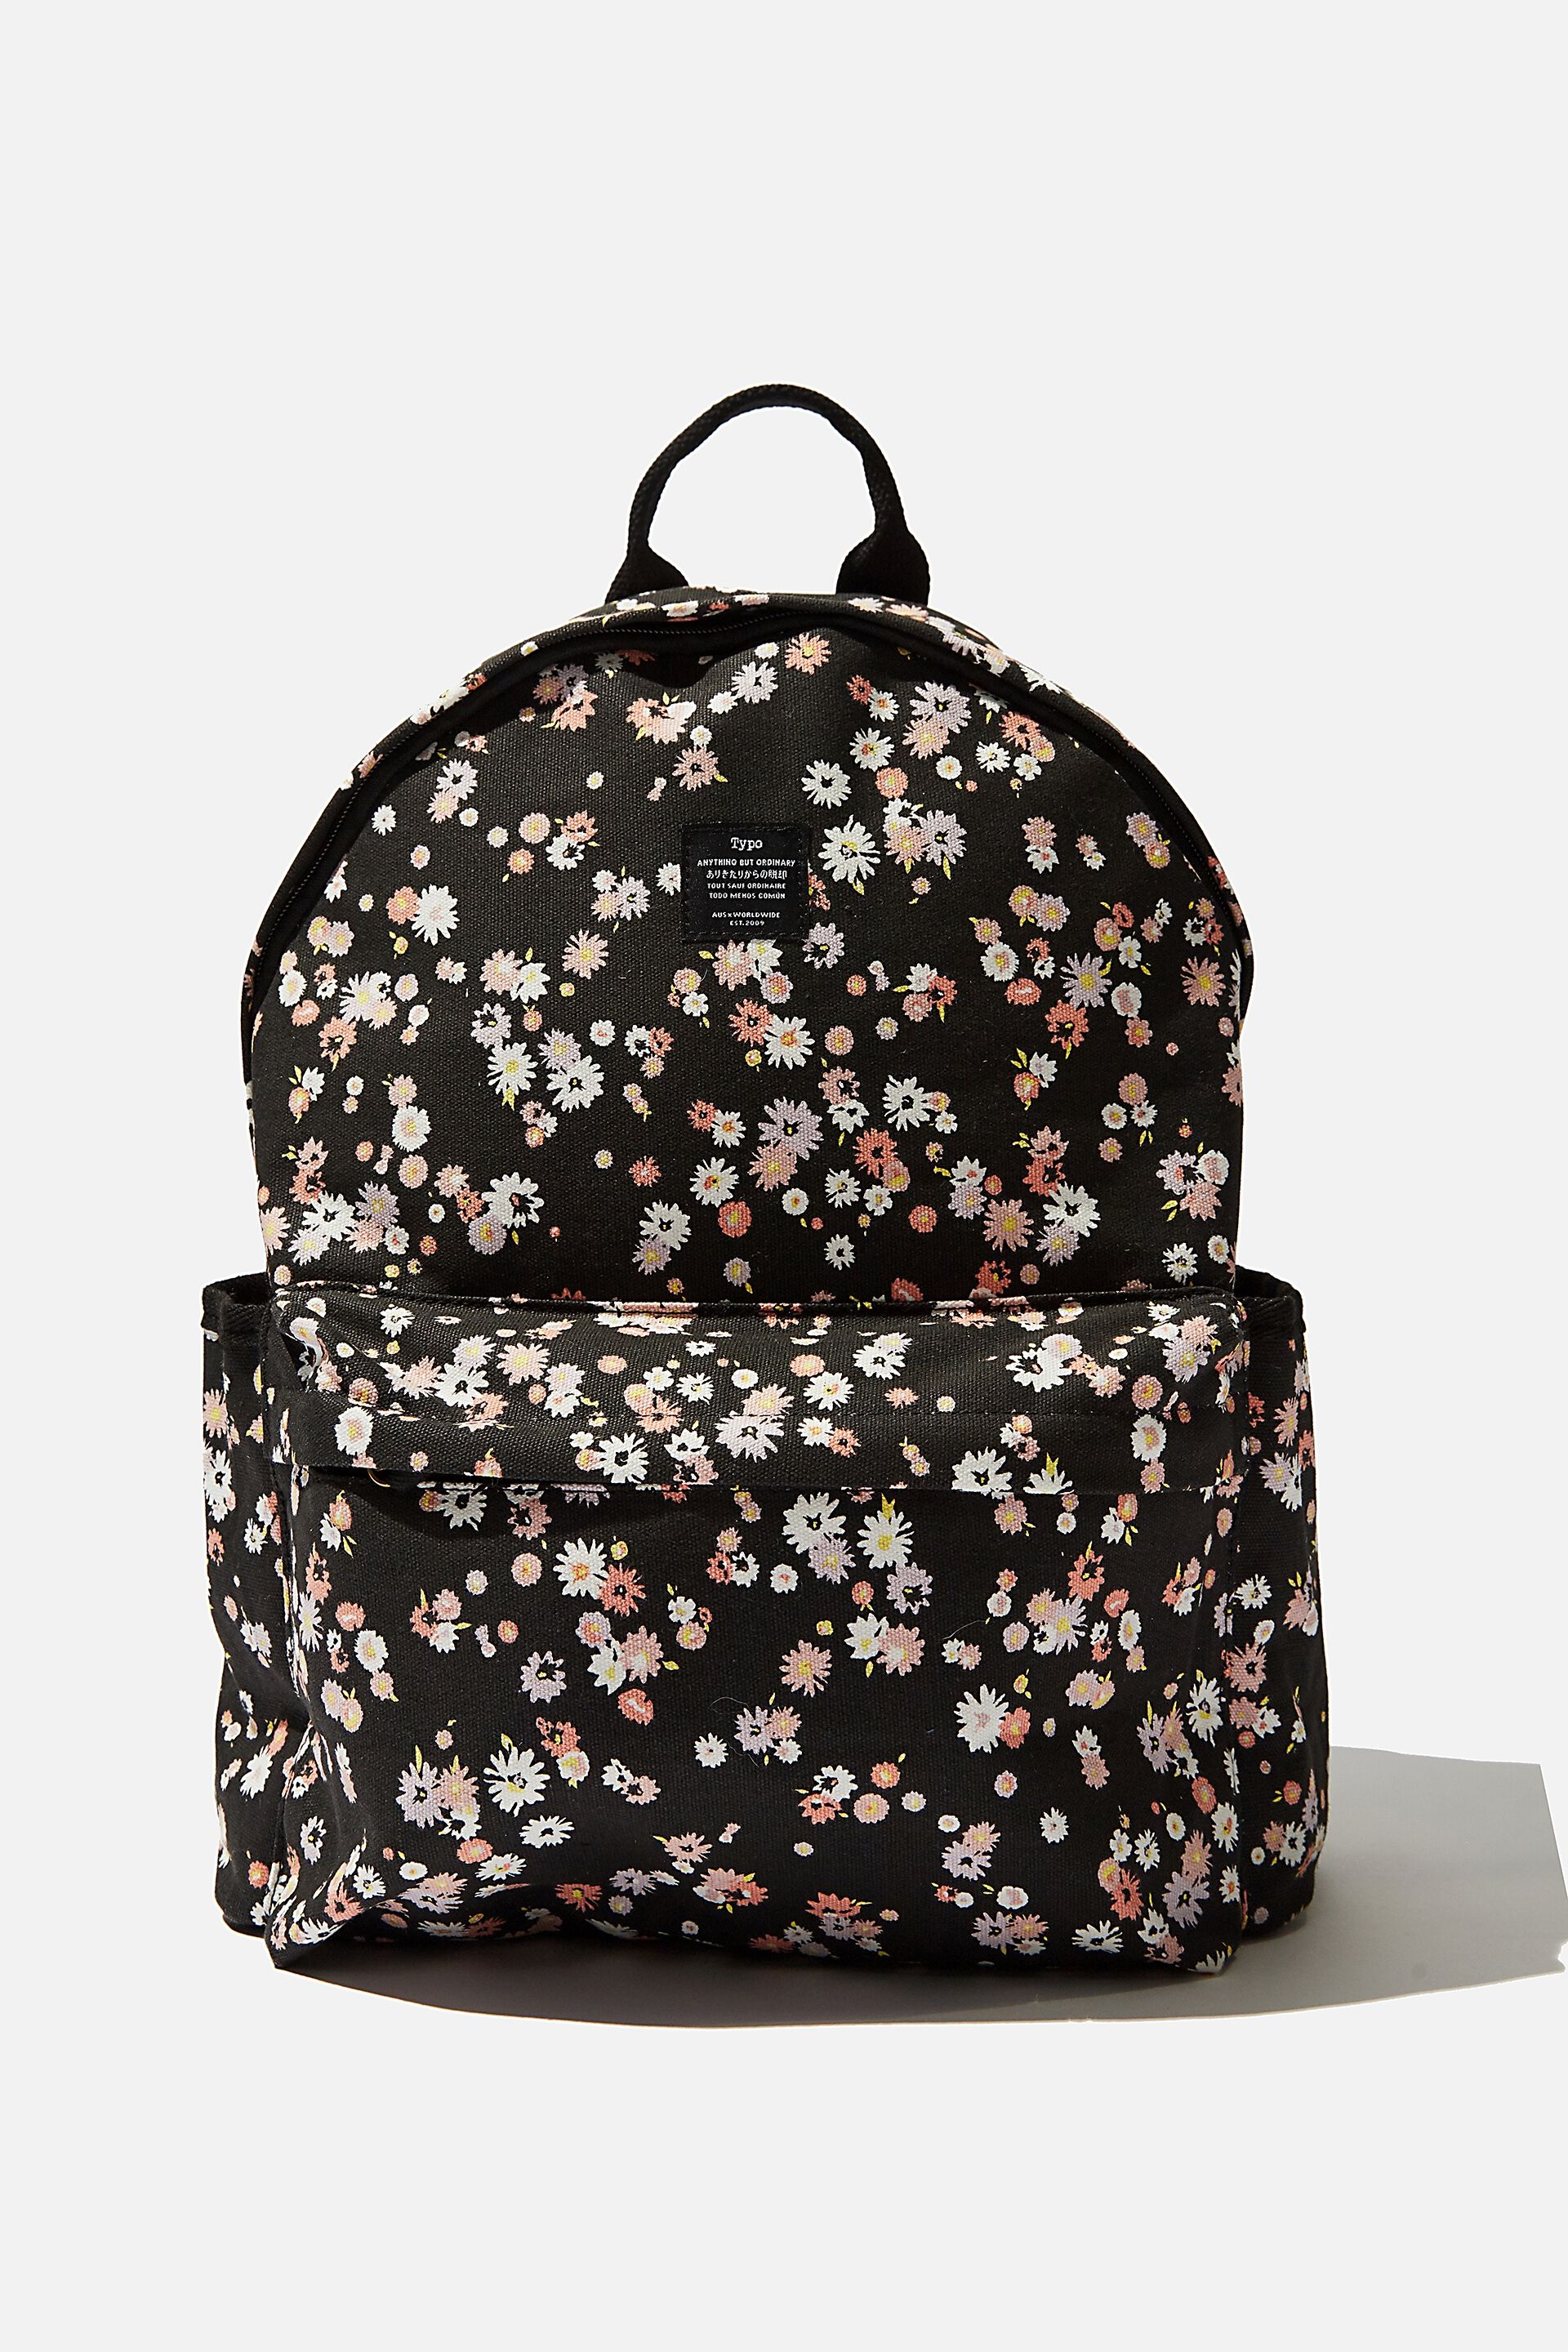 backpacks under 30 dollars